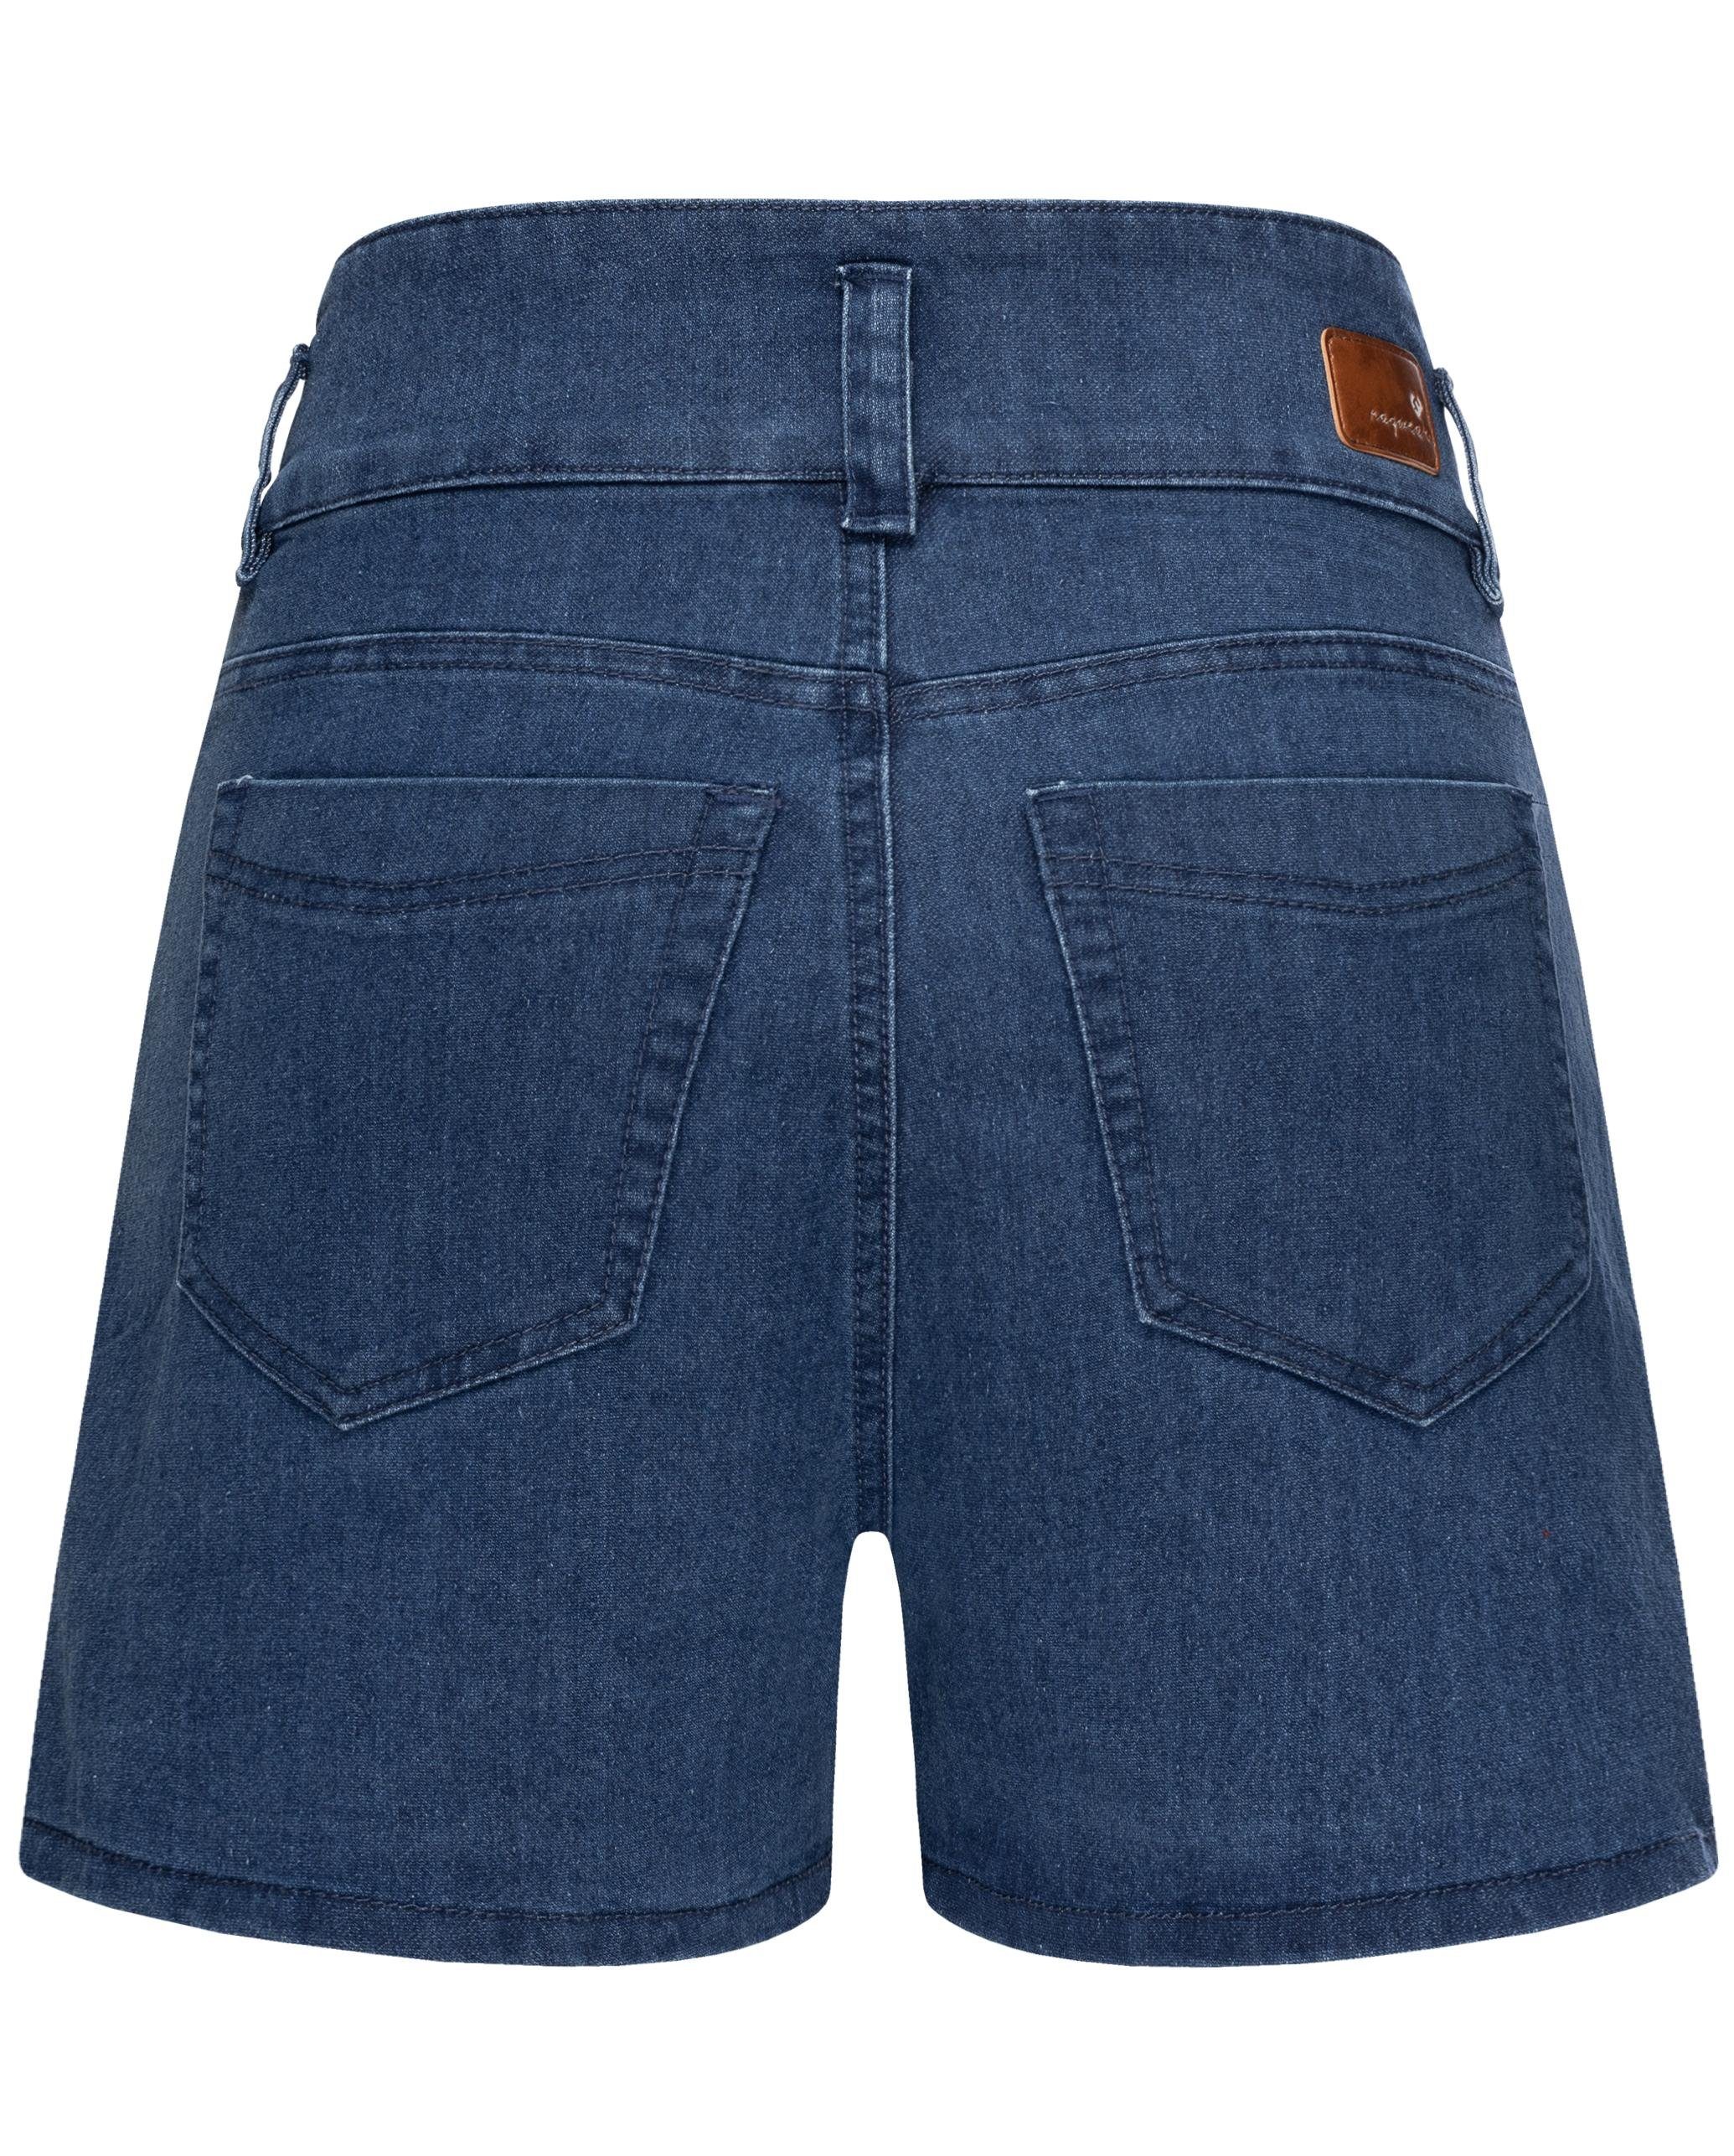 Ragwear Shorts Suzzie stylische, kurze indigo Jeansoptik Sommerhose in